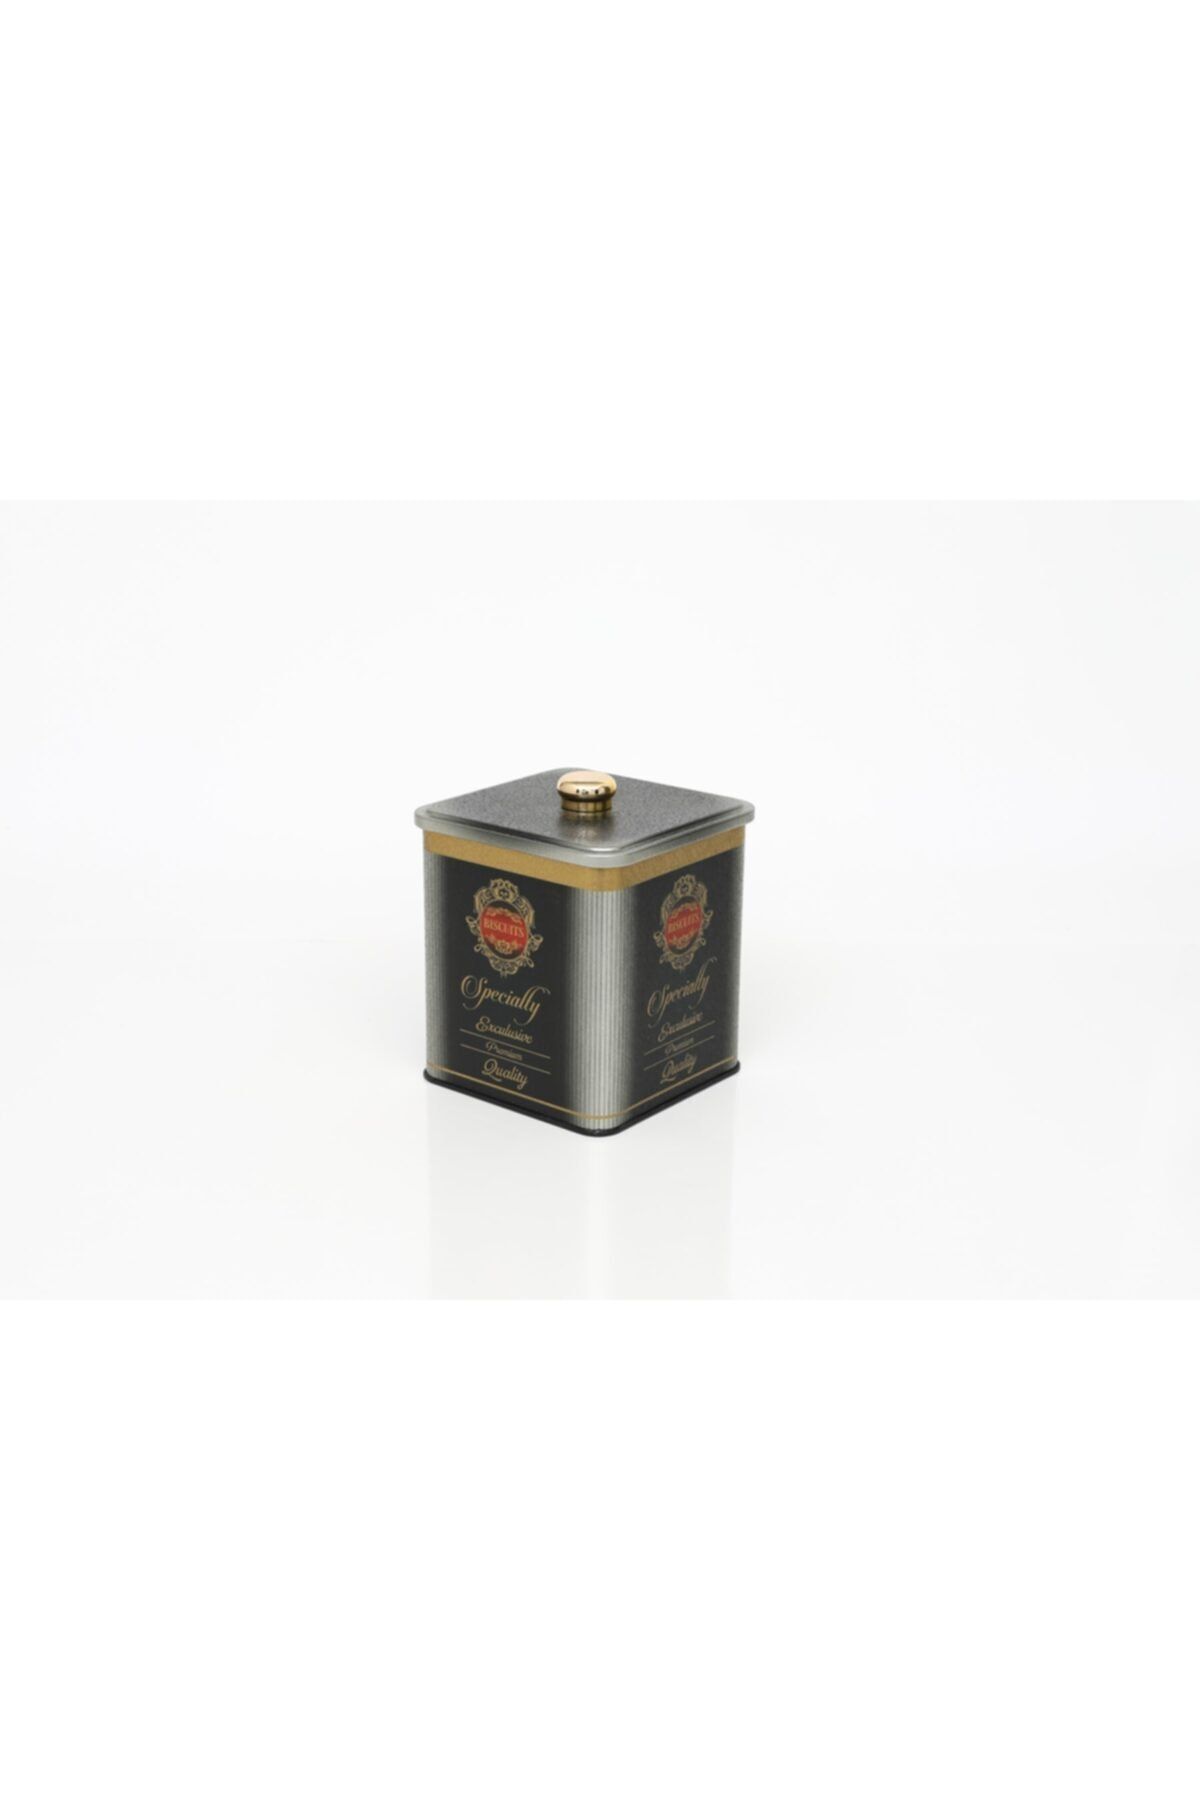 Evle Ef023-80 Specialty Gray Desenli Kare Metal Saklama Kabı 12x12 Cm